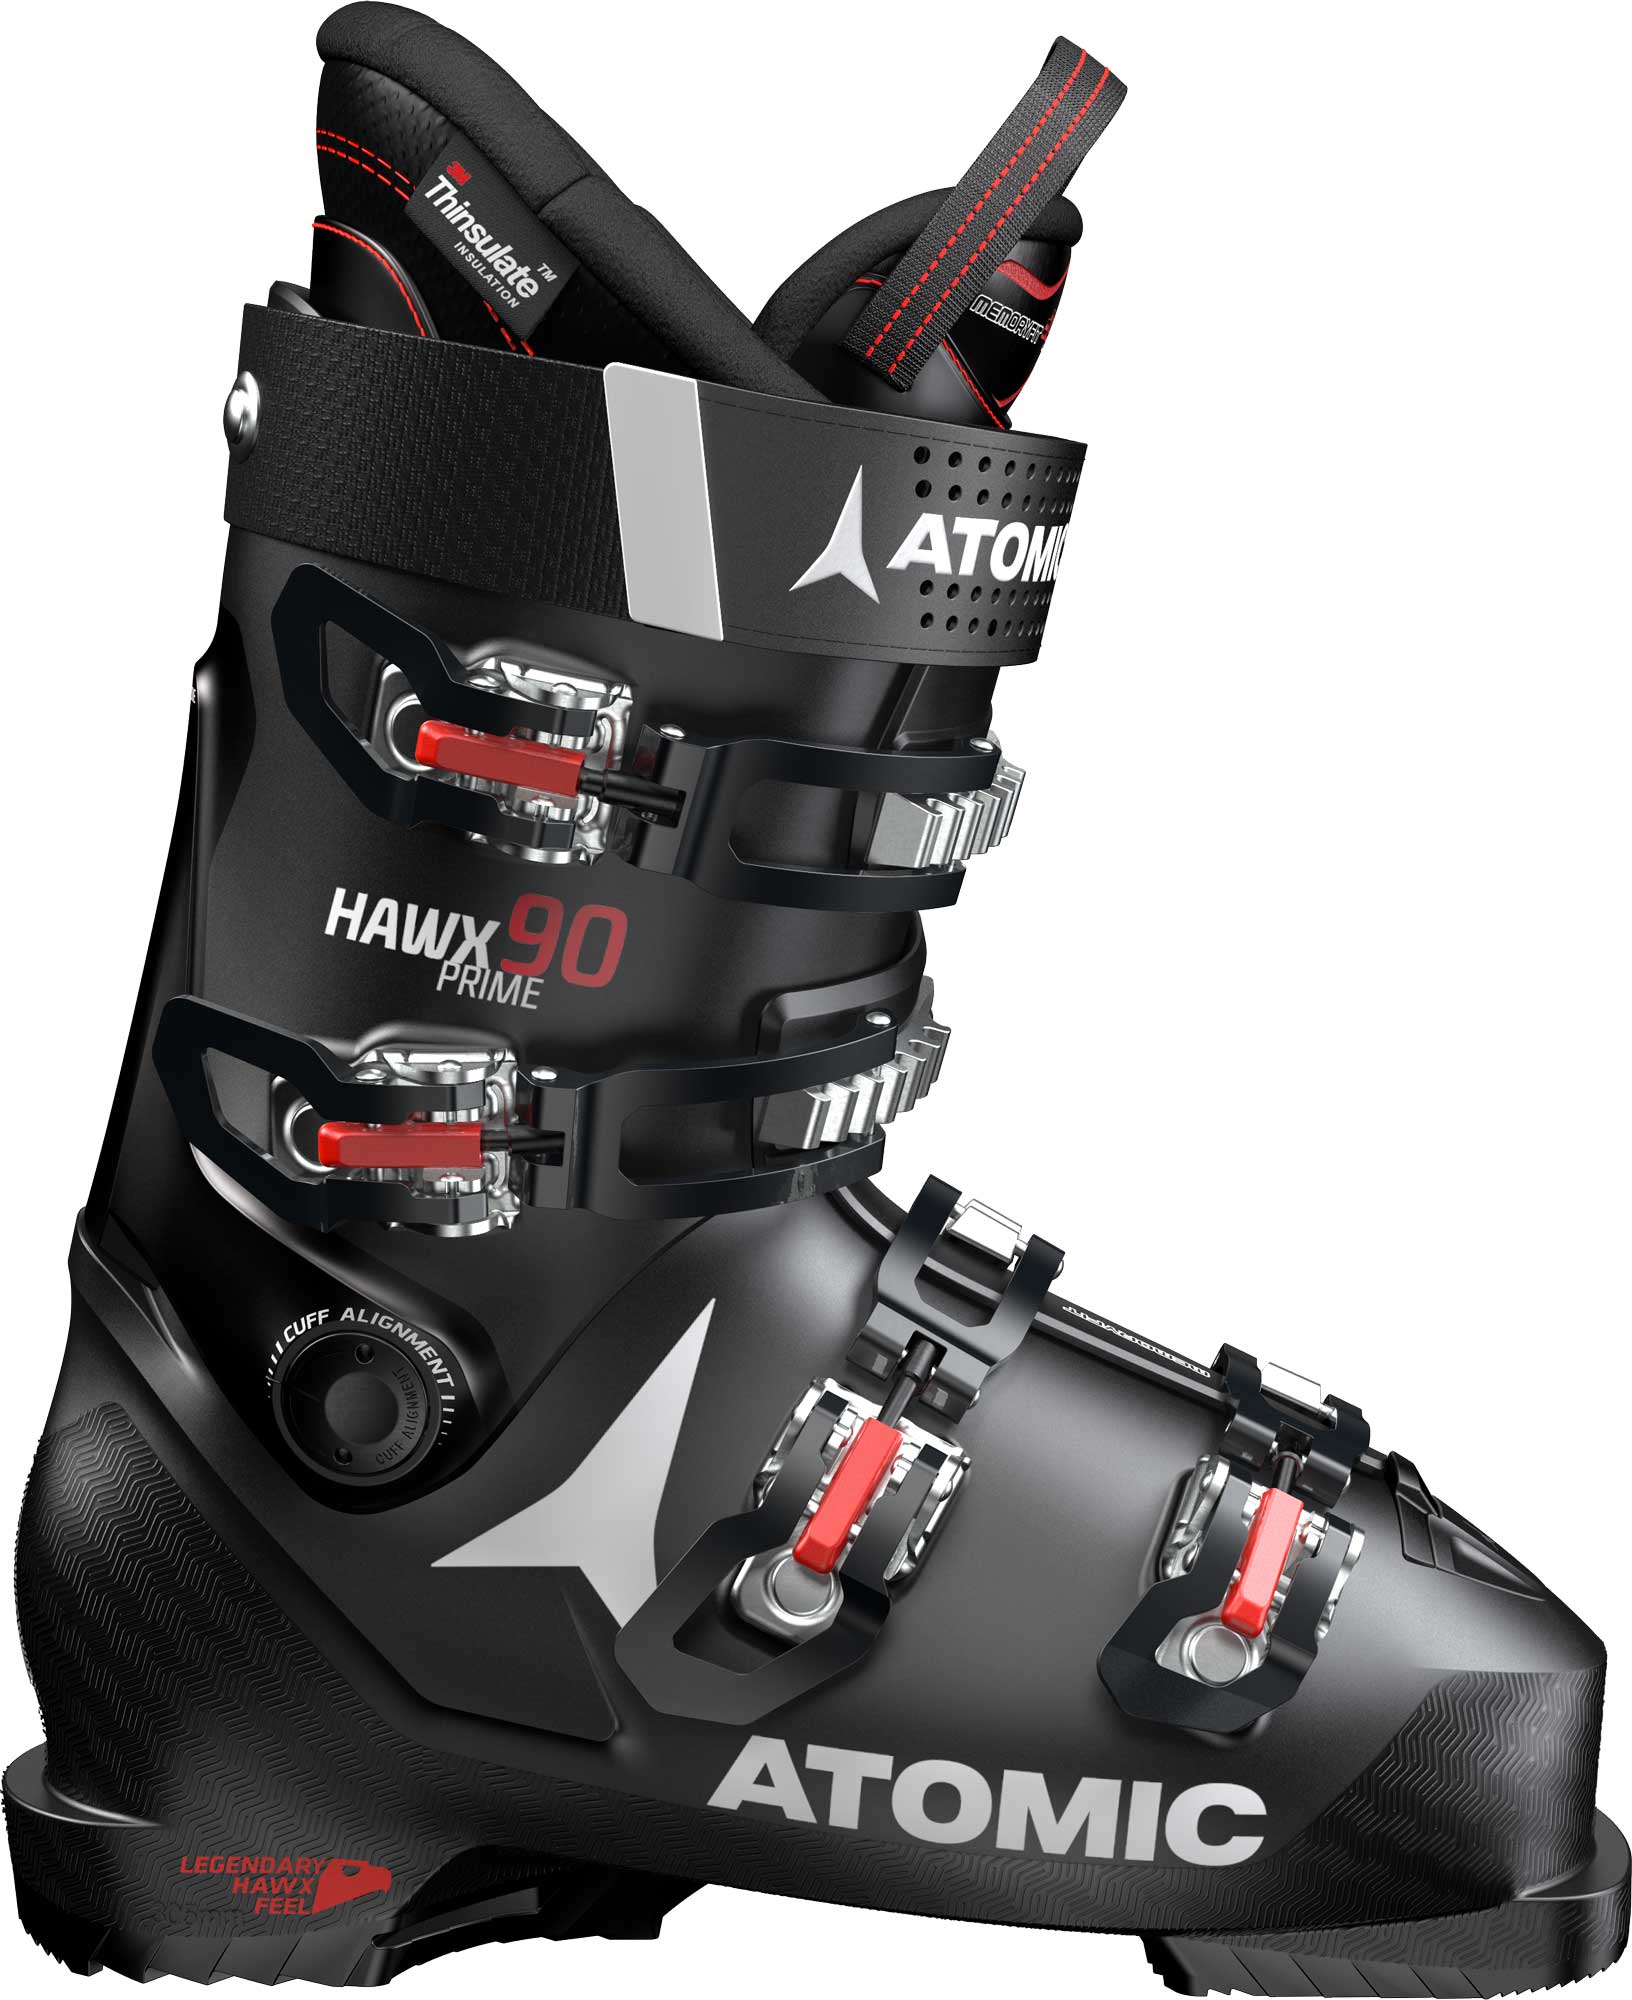 Unisex ski boots